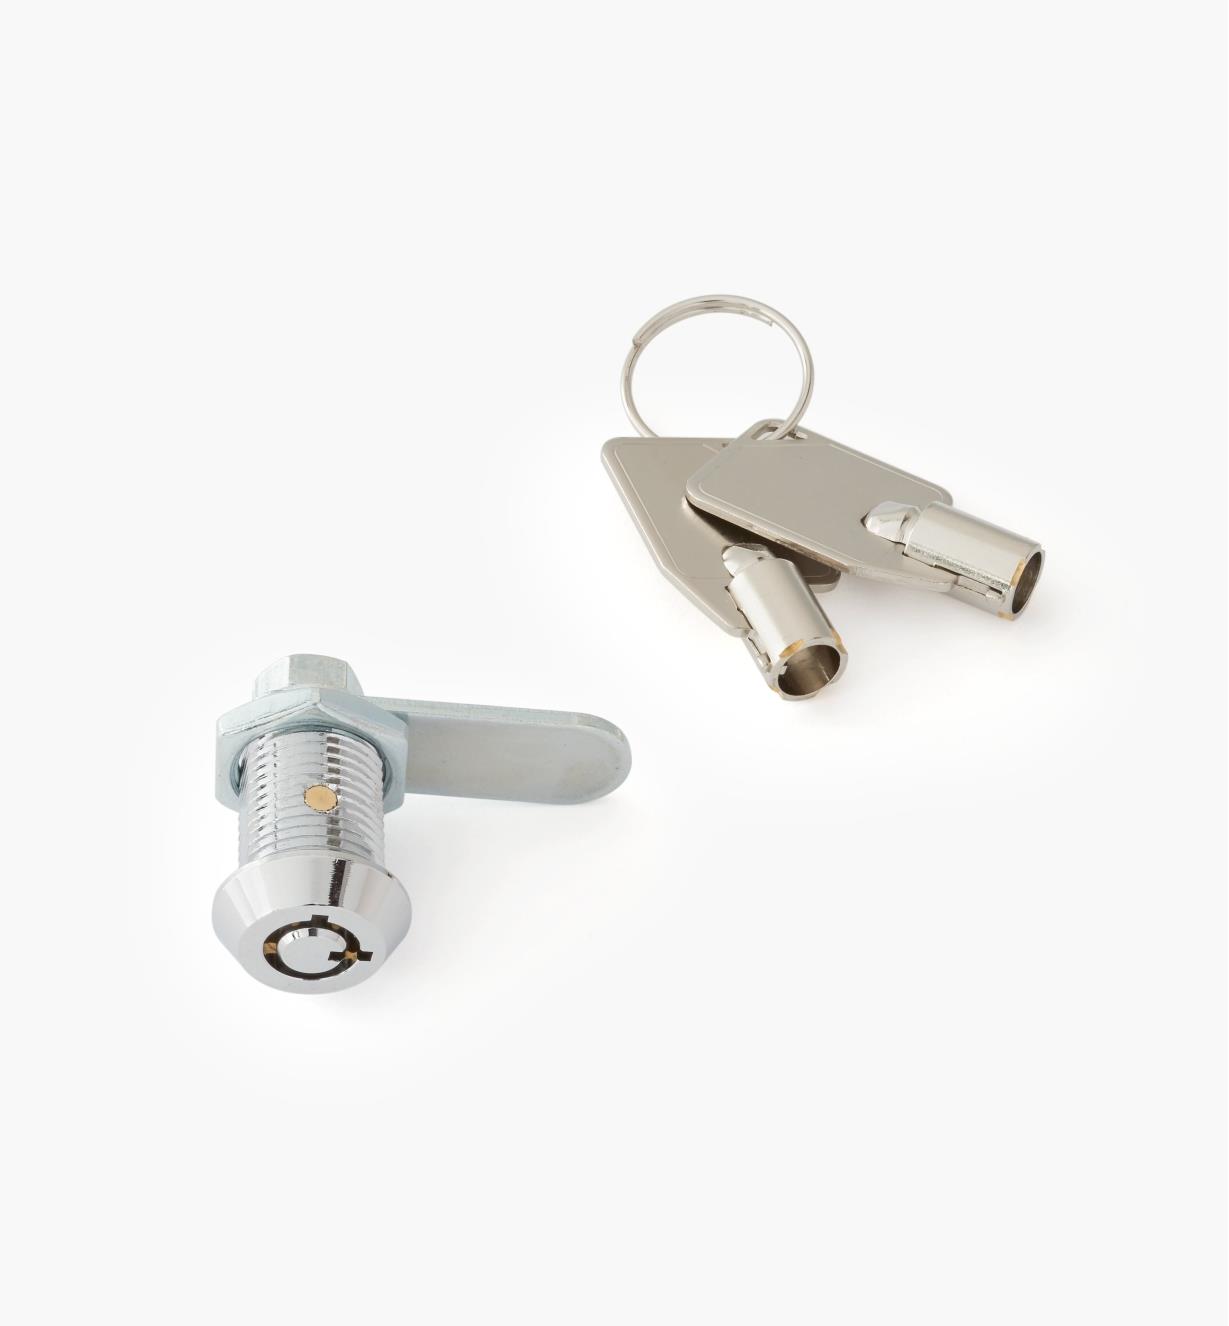 00L1130 - 1/2" Micro Cam Lock